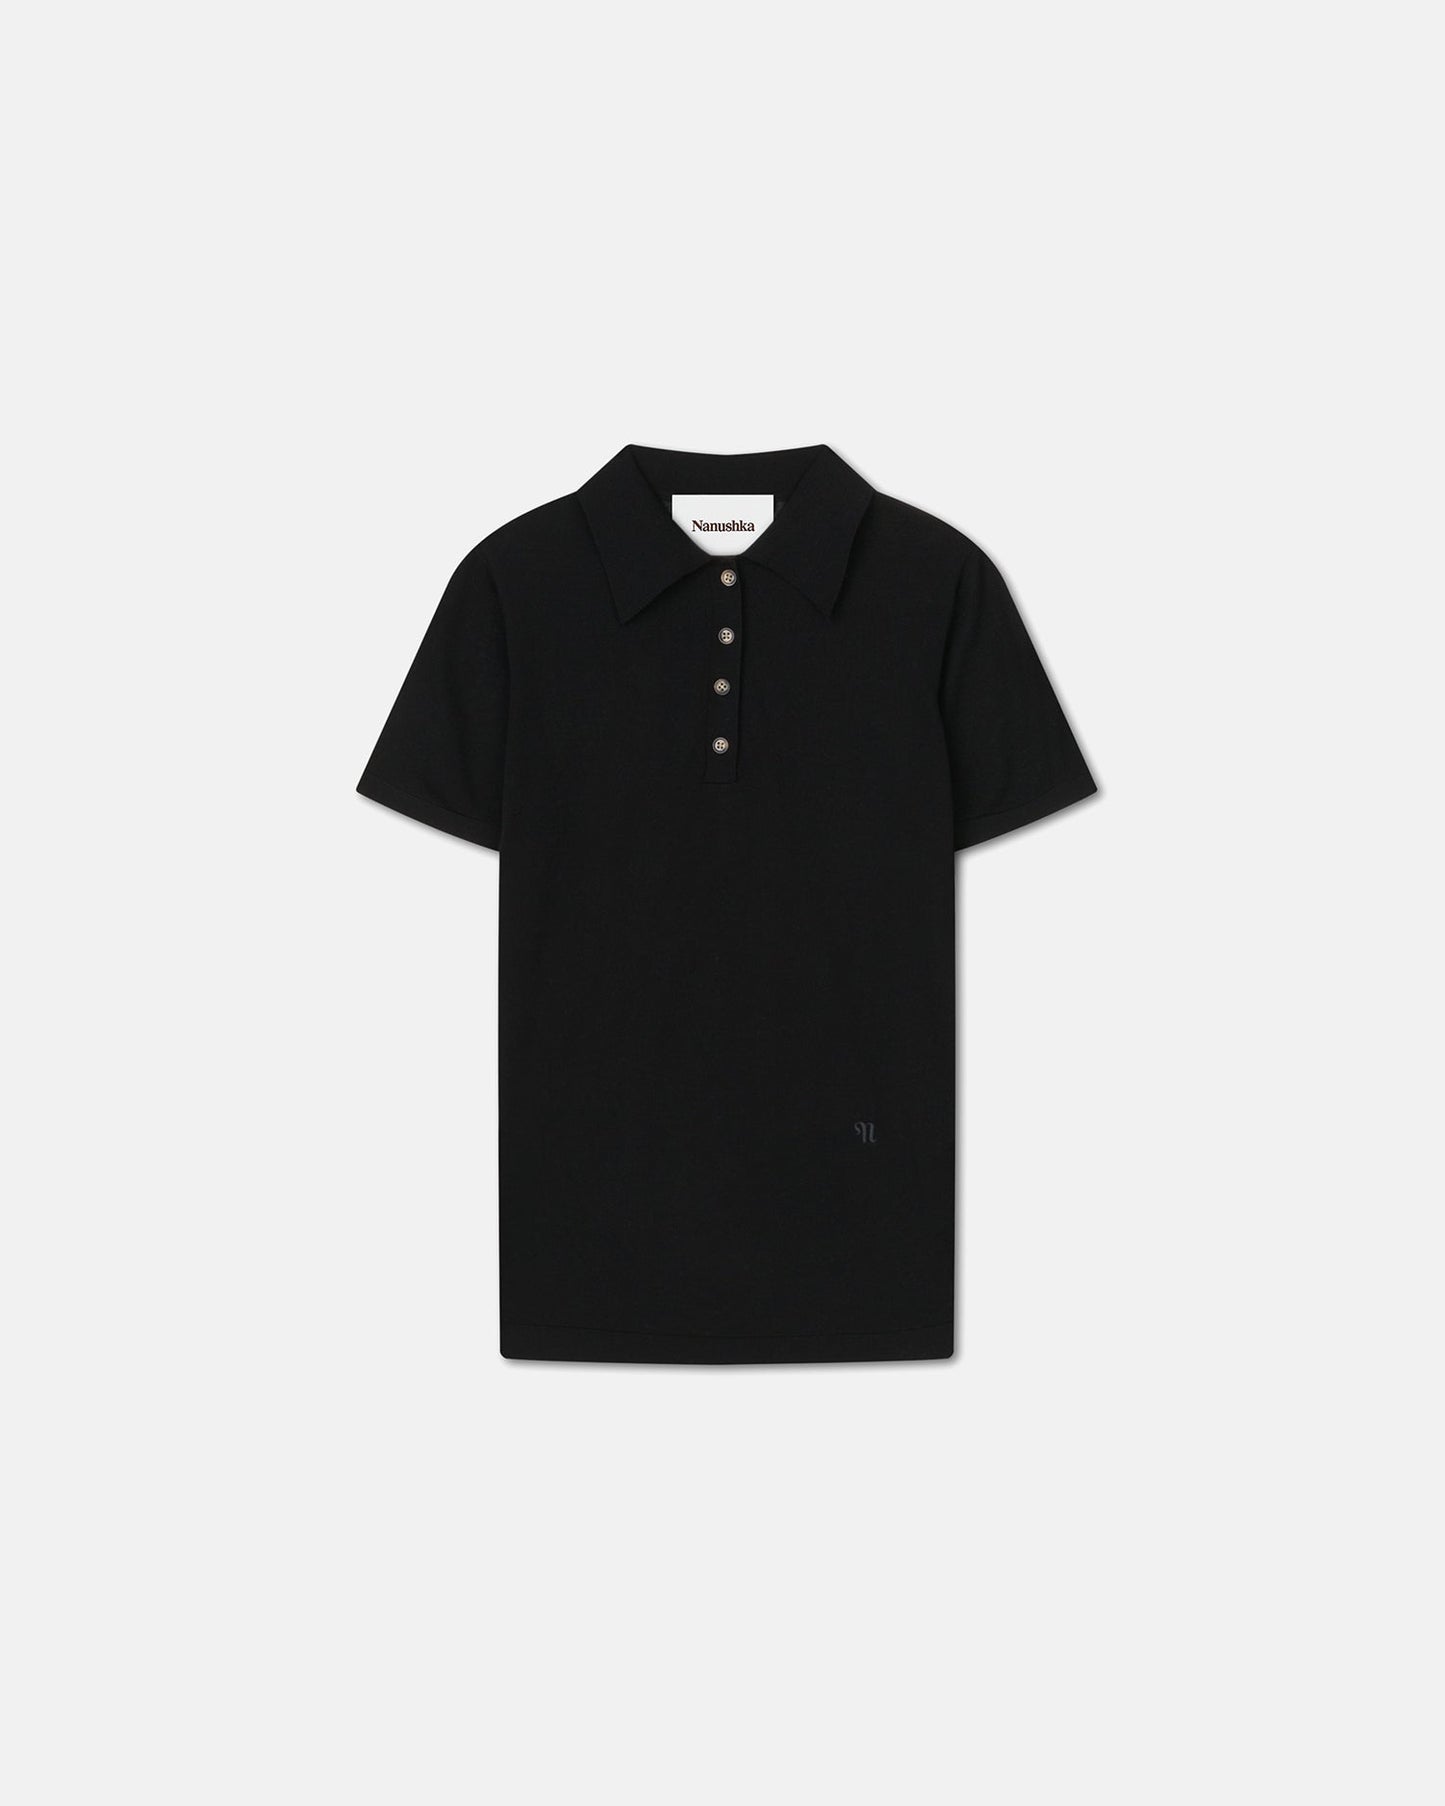 Hatti - Superfine Merino Polo Shirt - Black